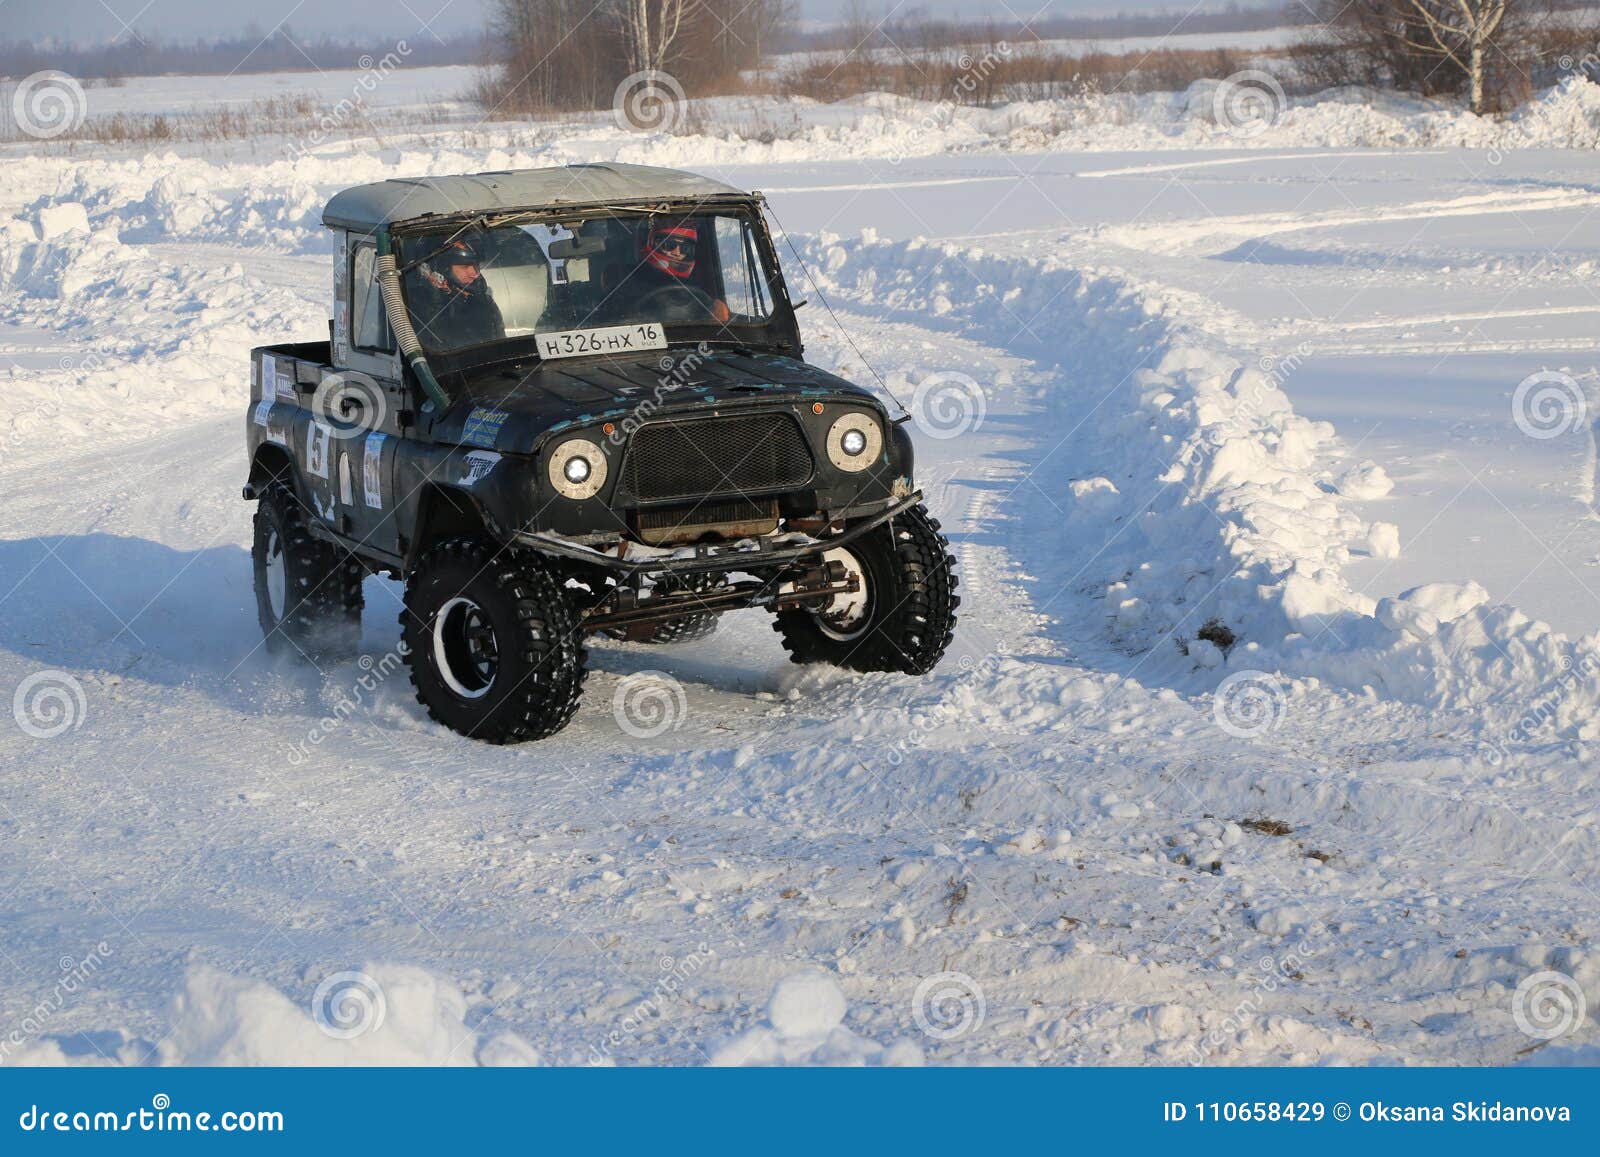 SALTAC-KOREM, RUSSIA-FEBRUARY 11, 2018: Winter Auto Show Jeeps ...